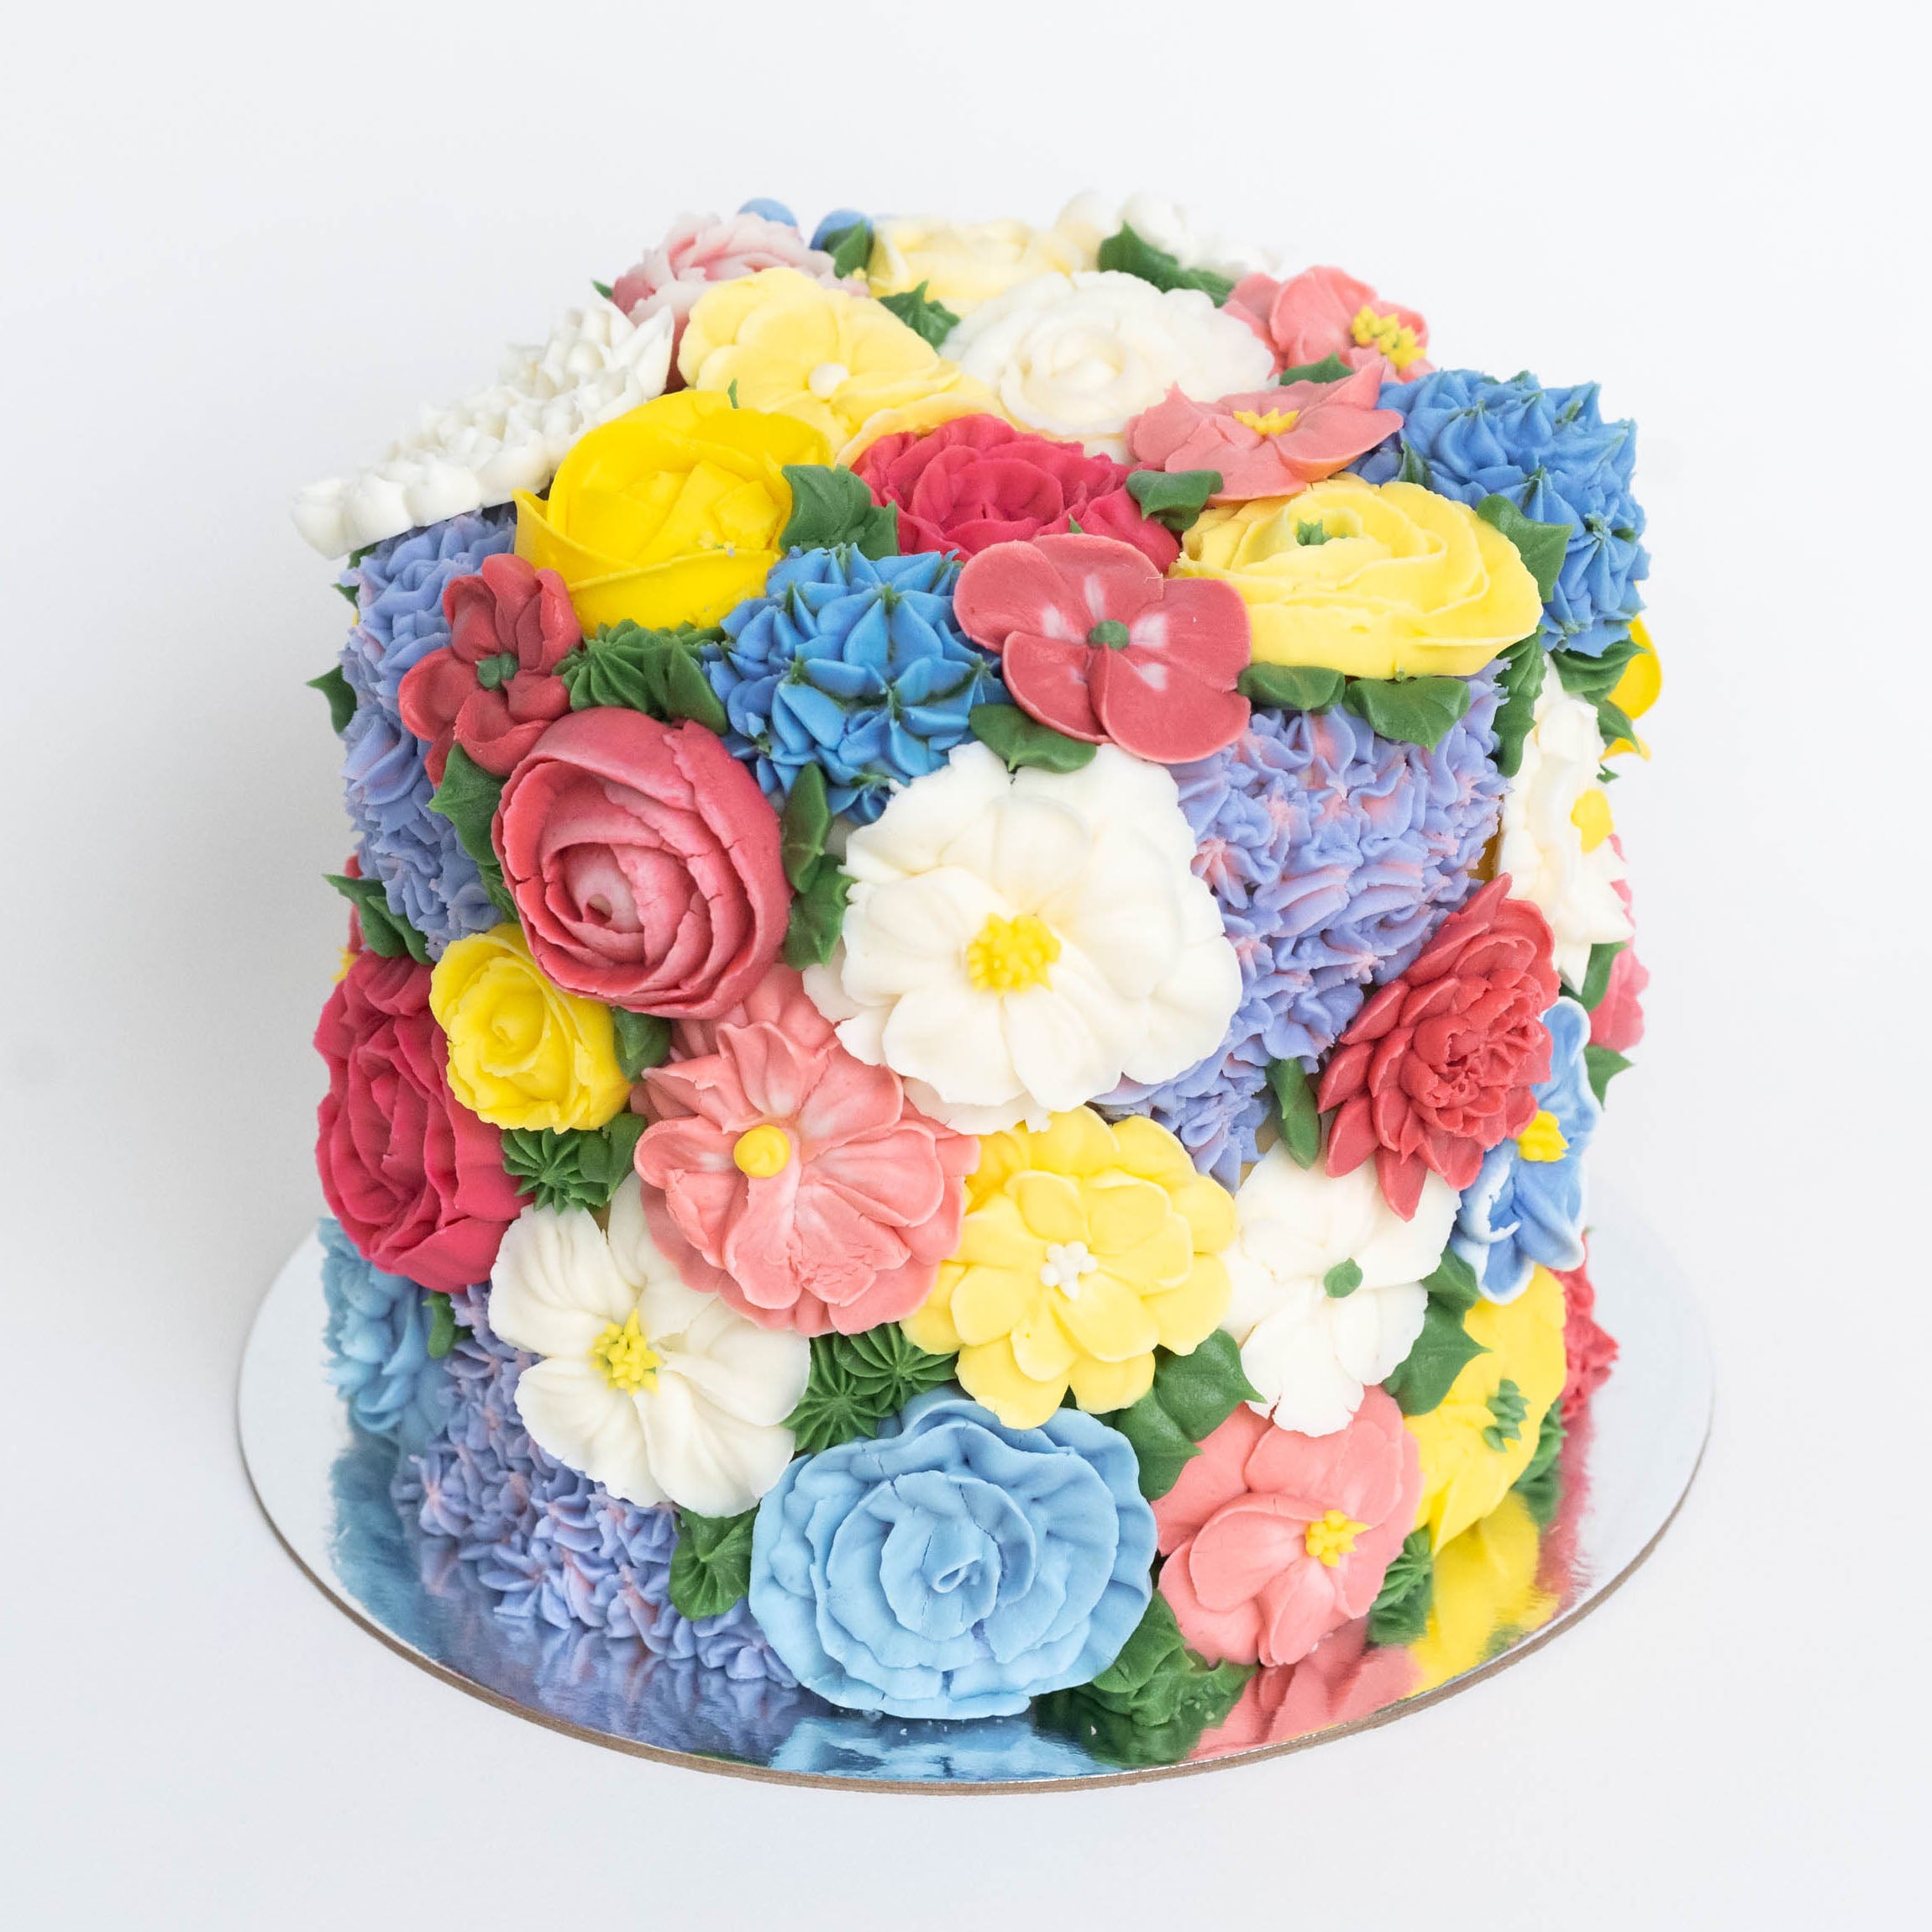 Wedding Cakes : How to Put Silk Flowers on Wedding Cake - YouTube